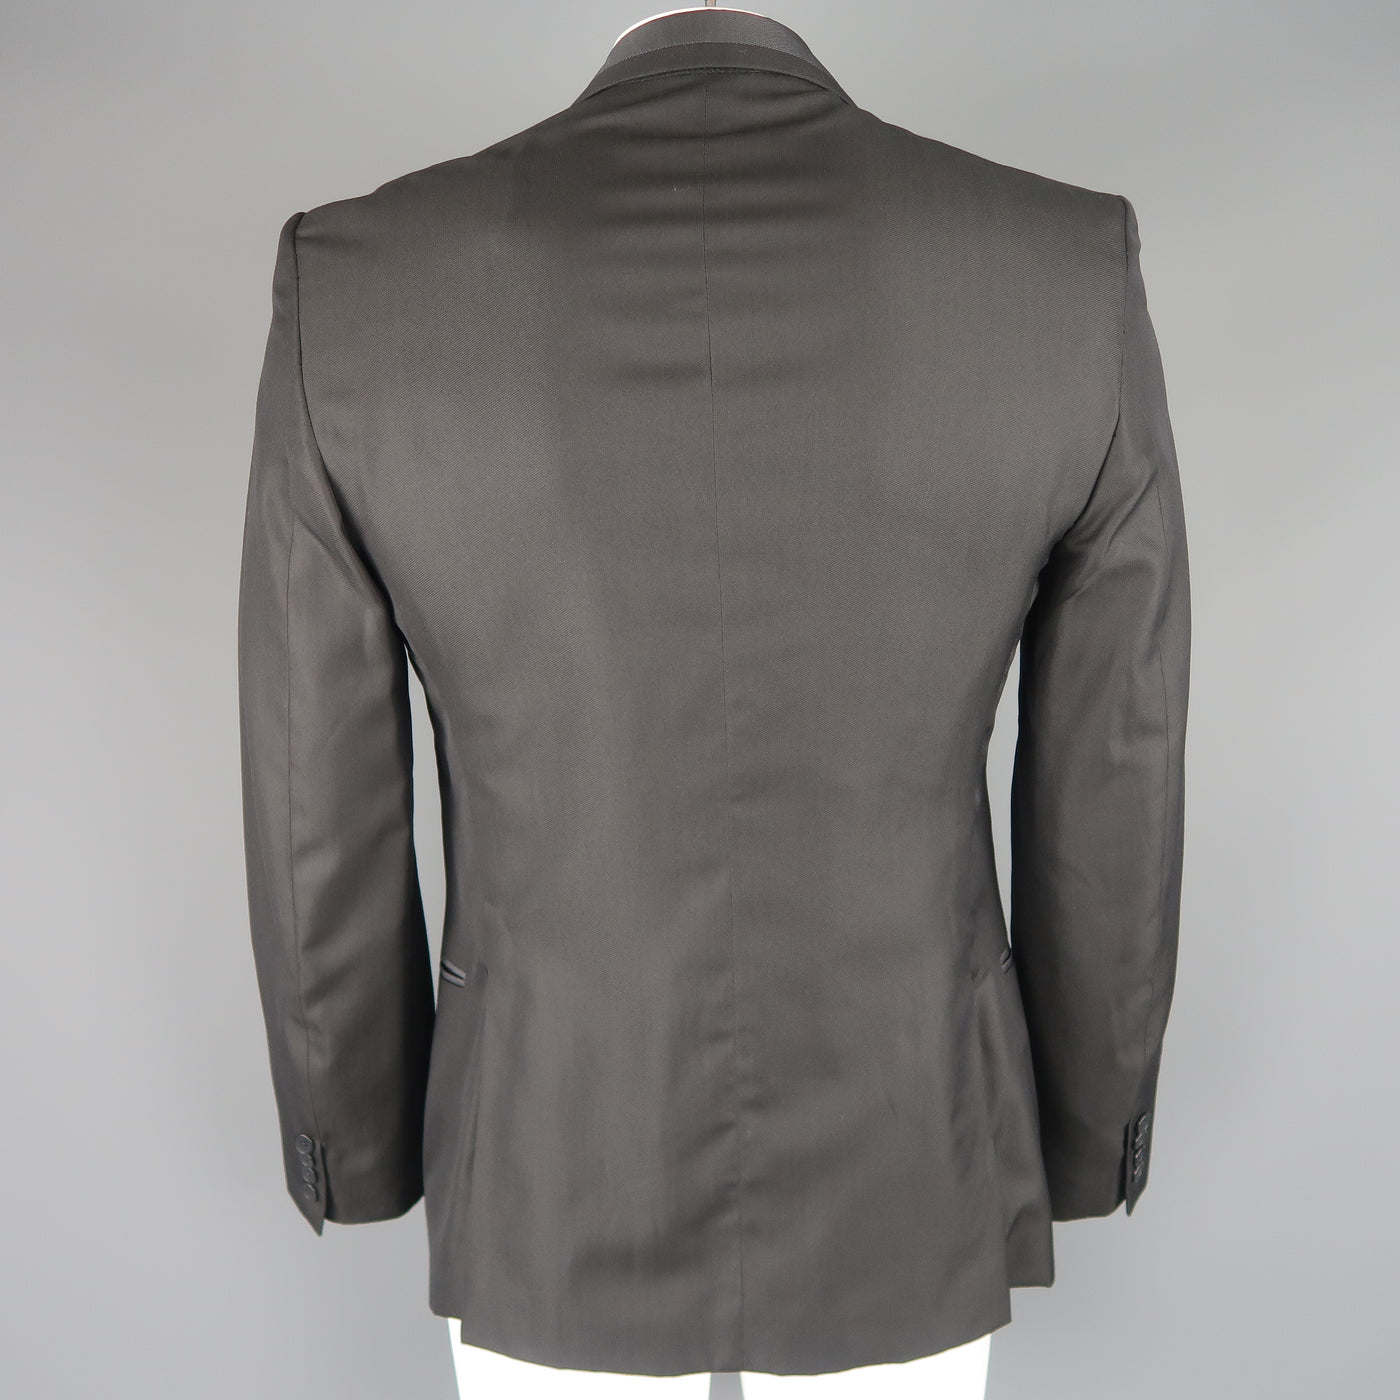 JUST CAVALLI 42 Black Wool Blend Satin Piping Peak Lapel Sport Coat Jacket